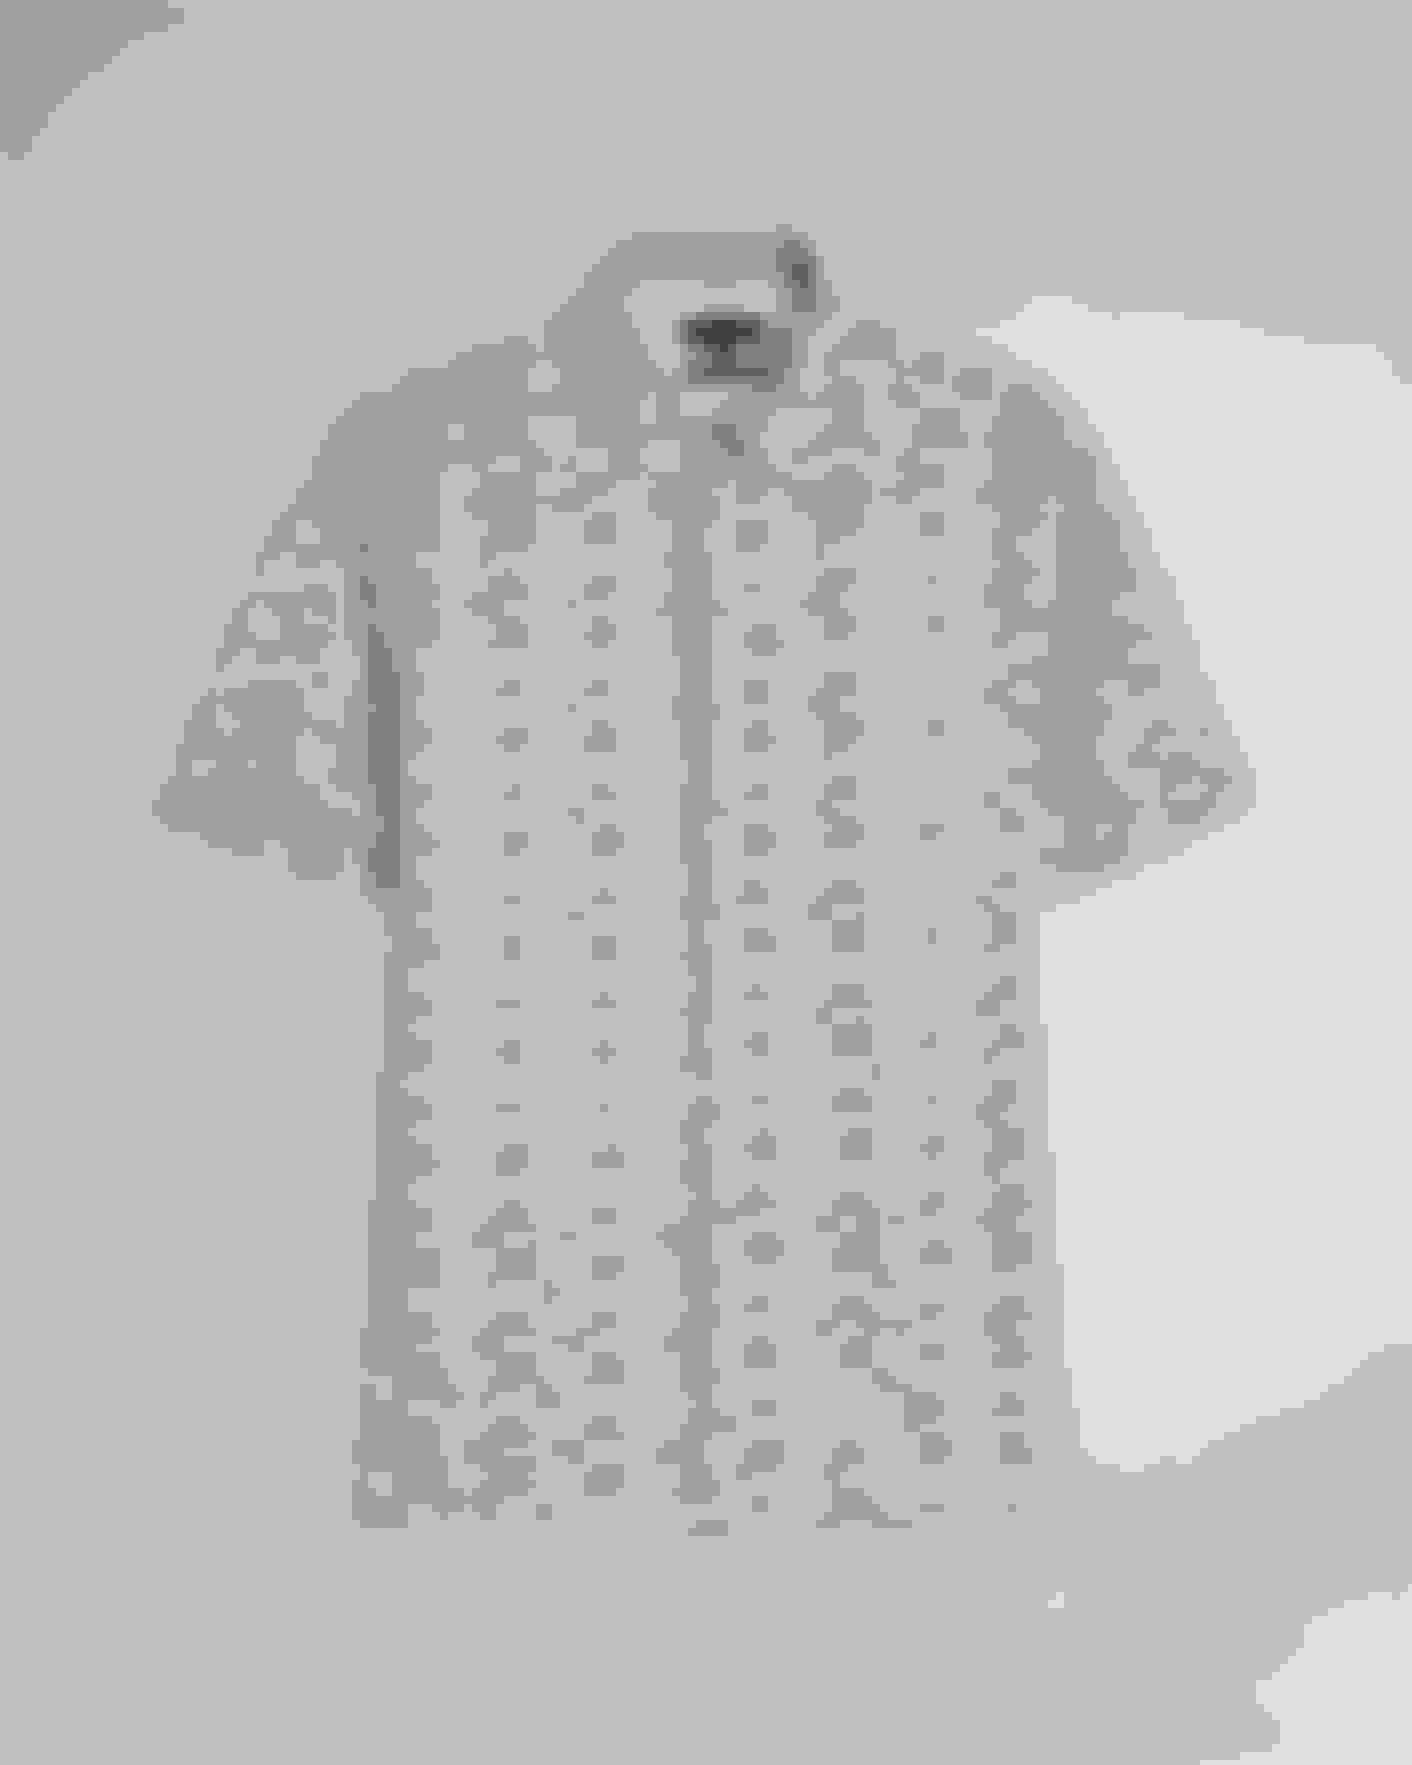 Ted Baker Hutspa Microdot L/s Shirt